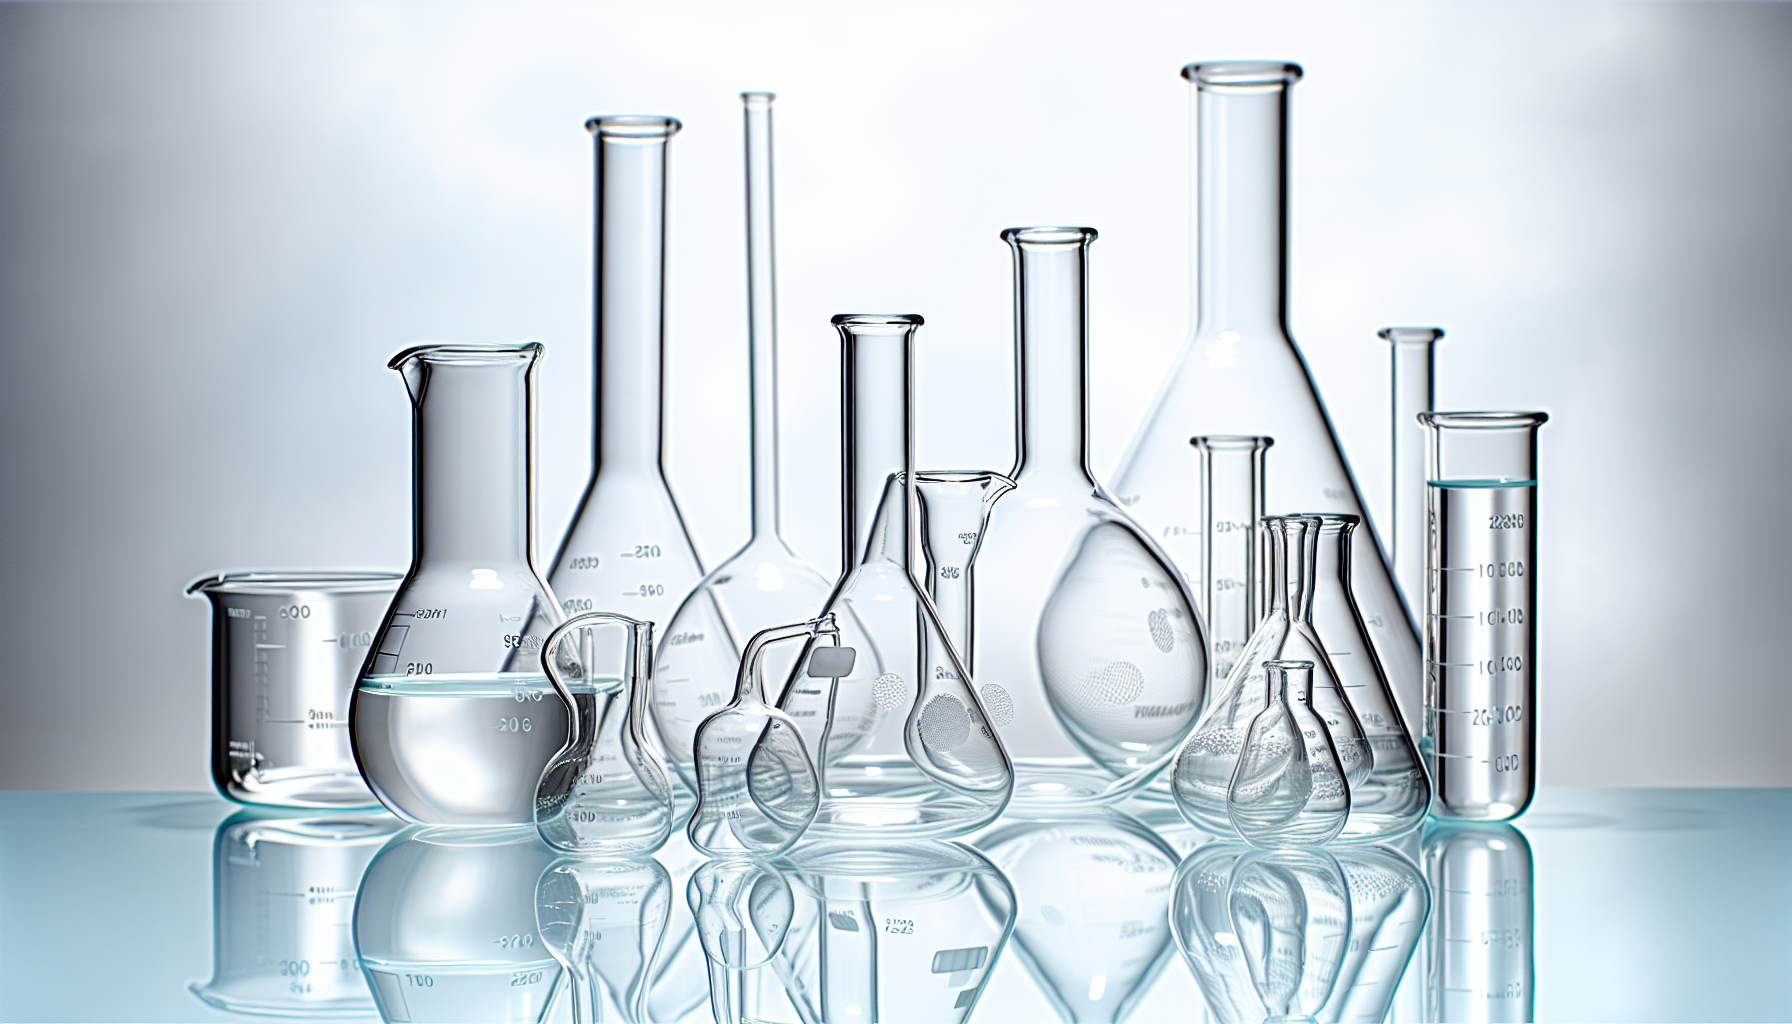 Various laboratory glassware including beakers, flasks, and volumetric instruments